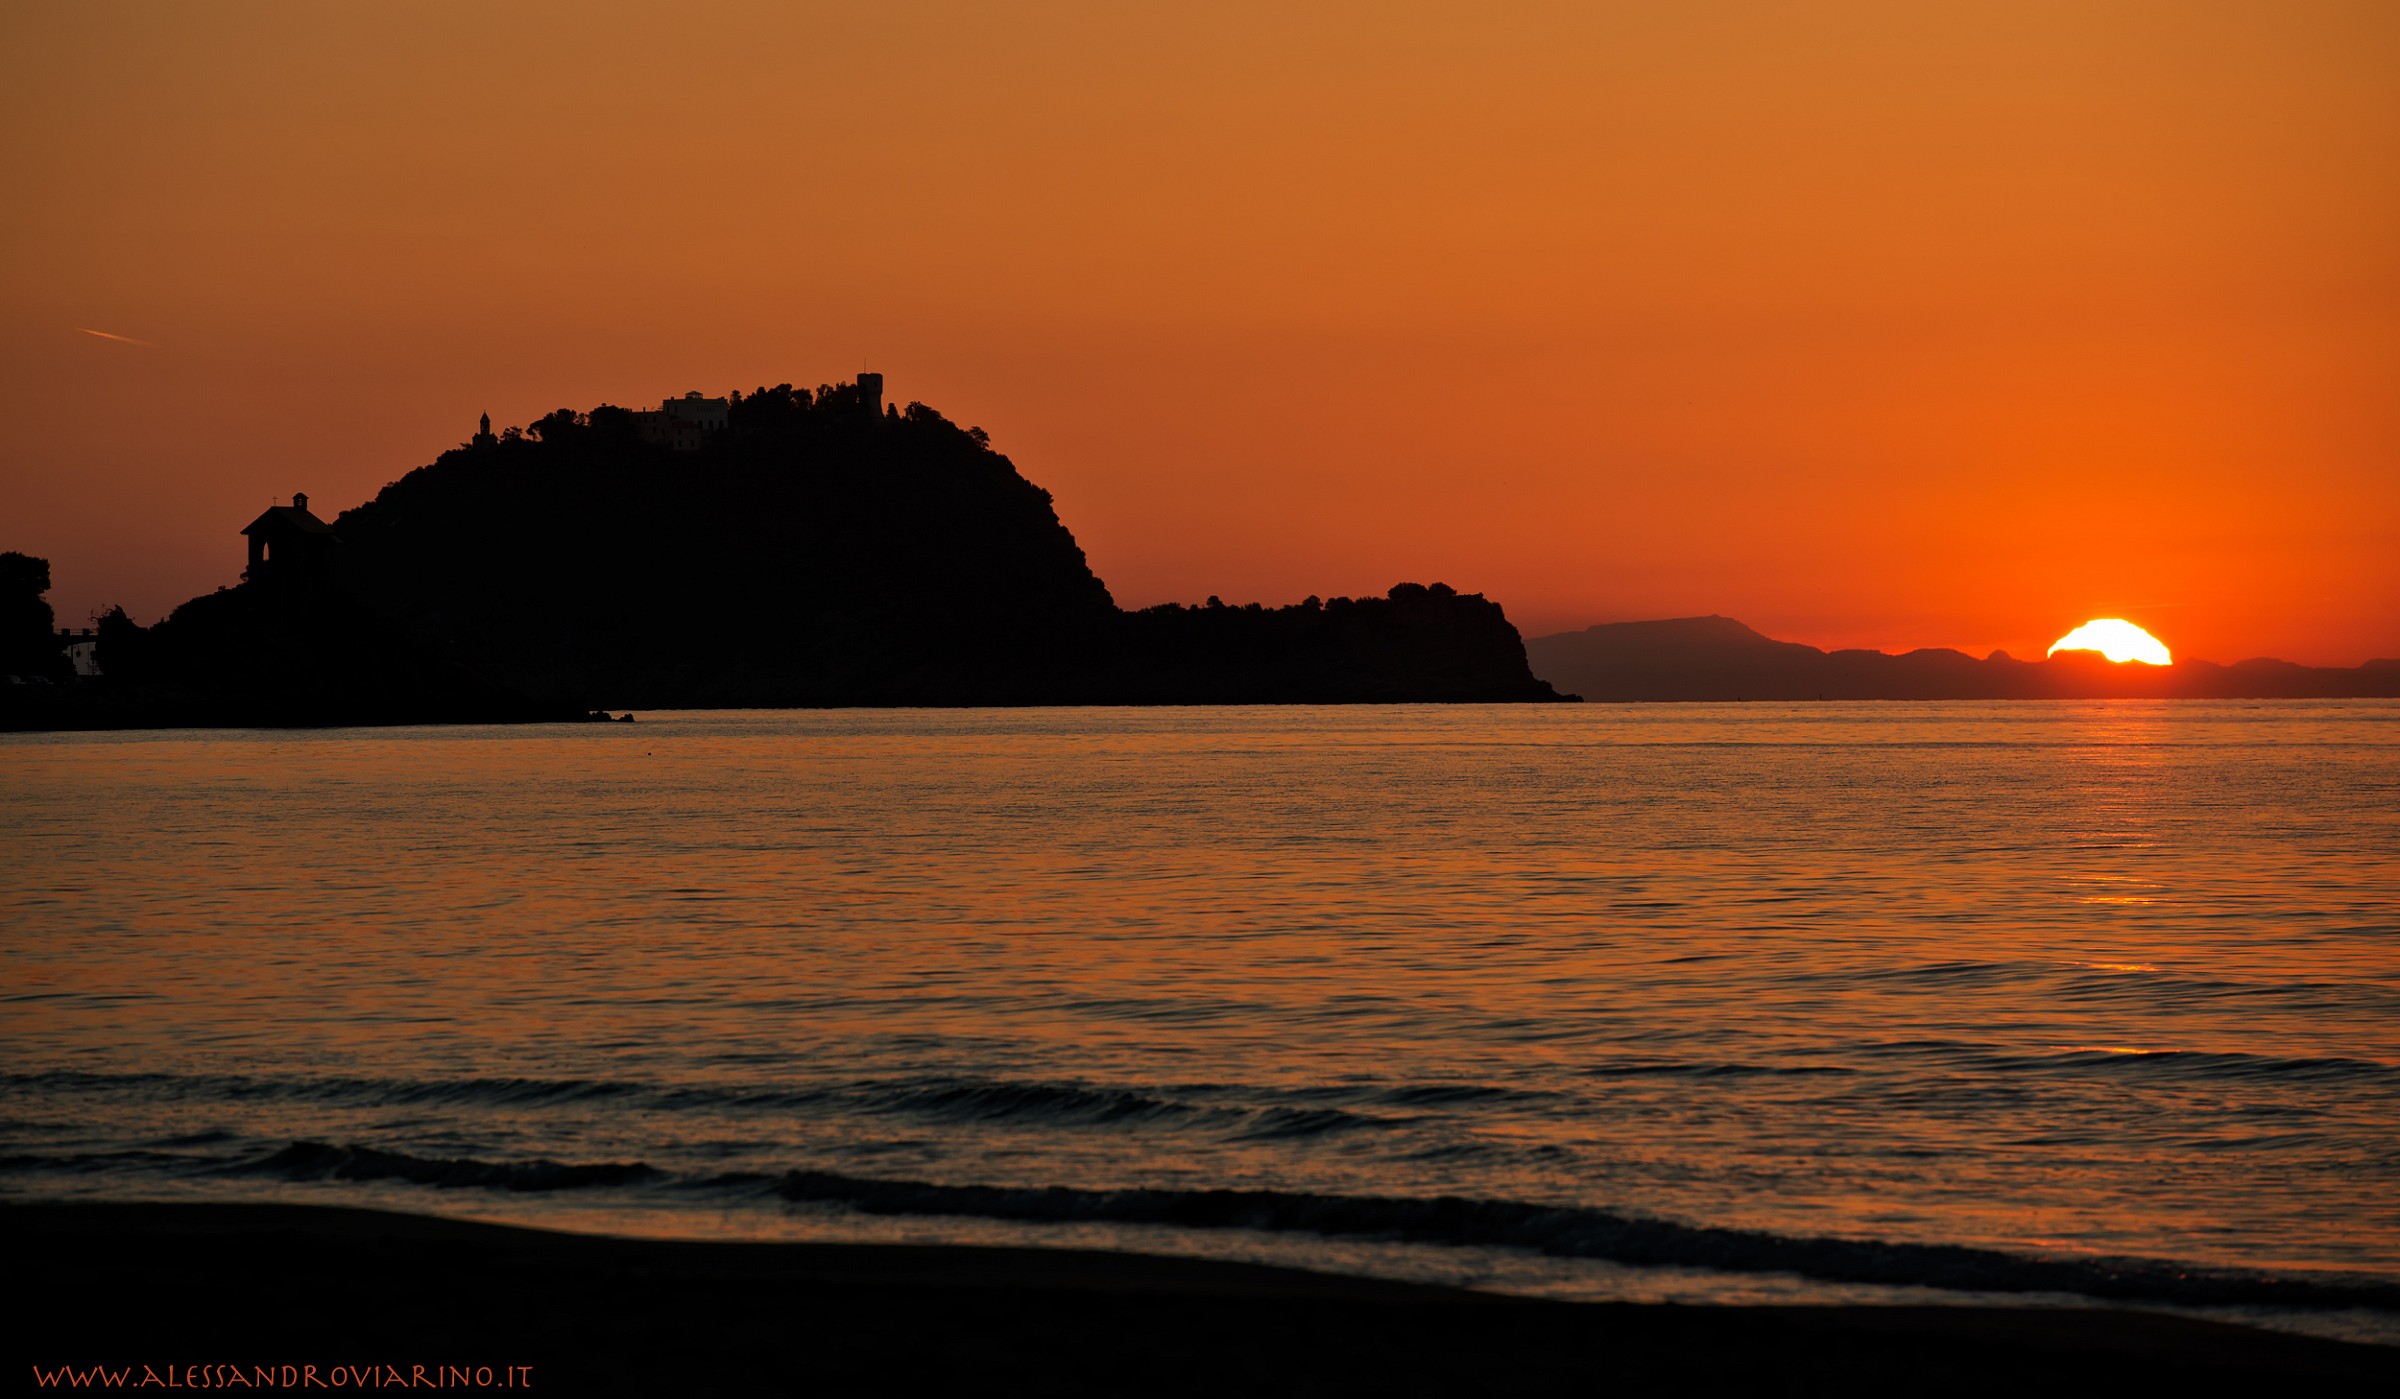 dawn in front of the island gallinara...